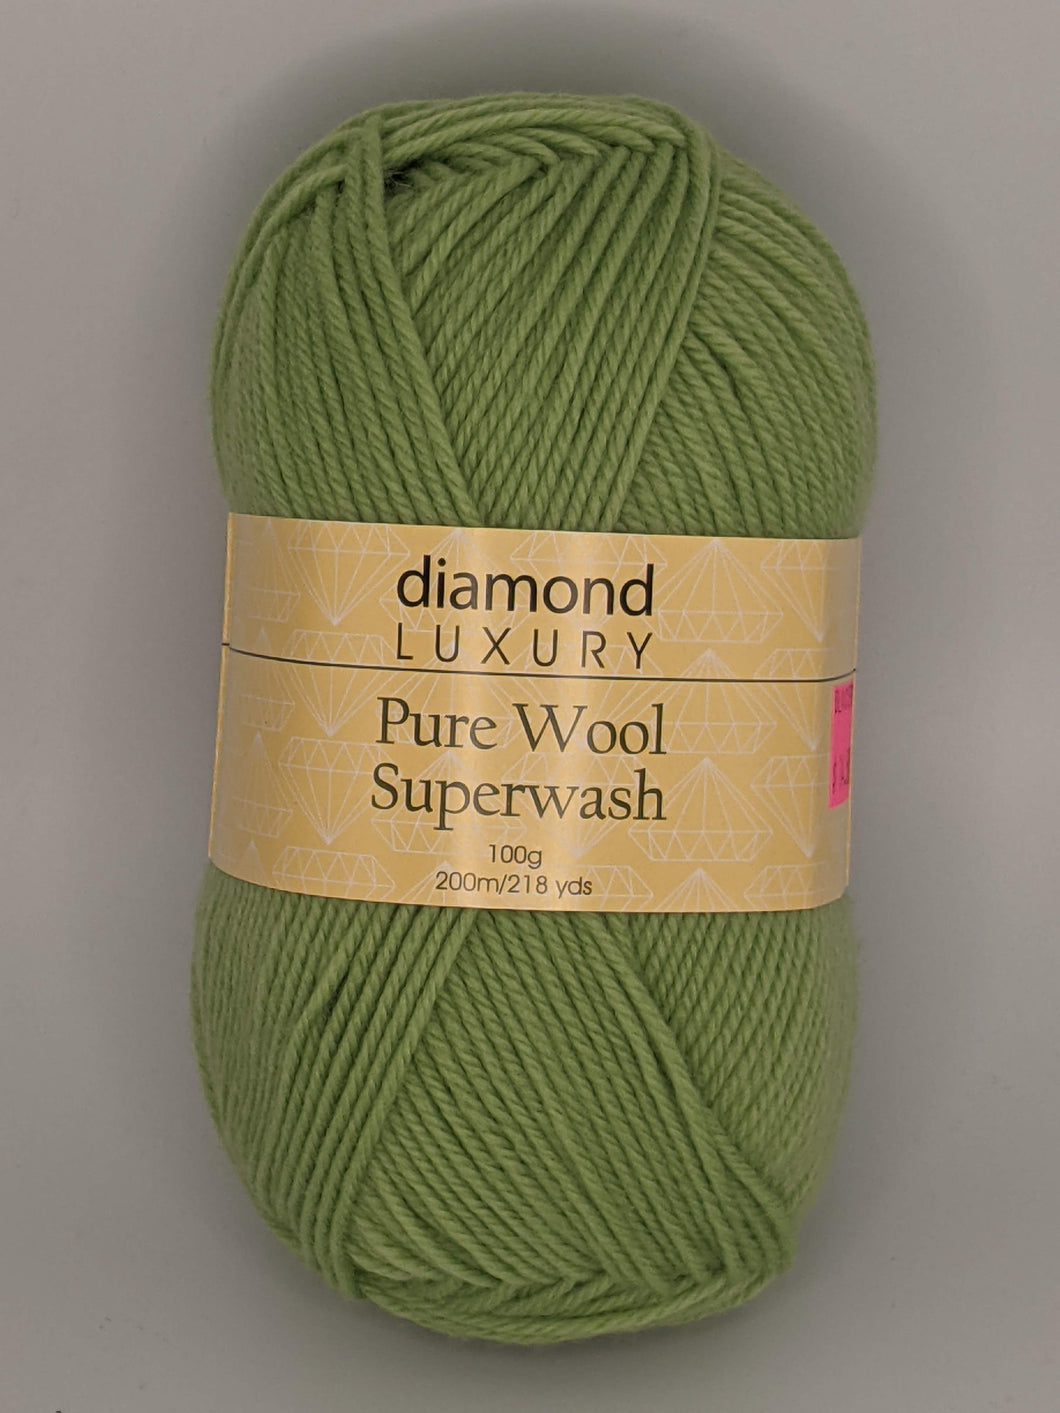 Diamond Luxury Pure Wool Superwash